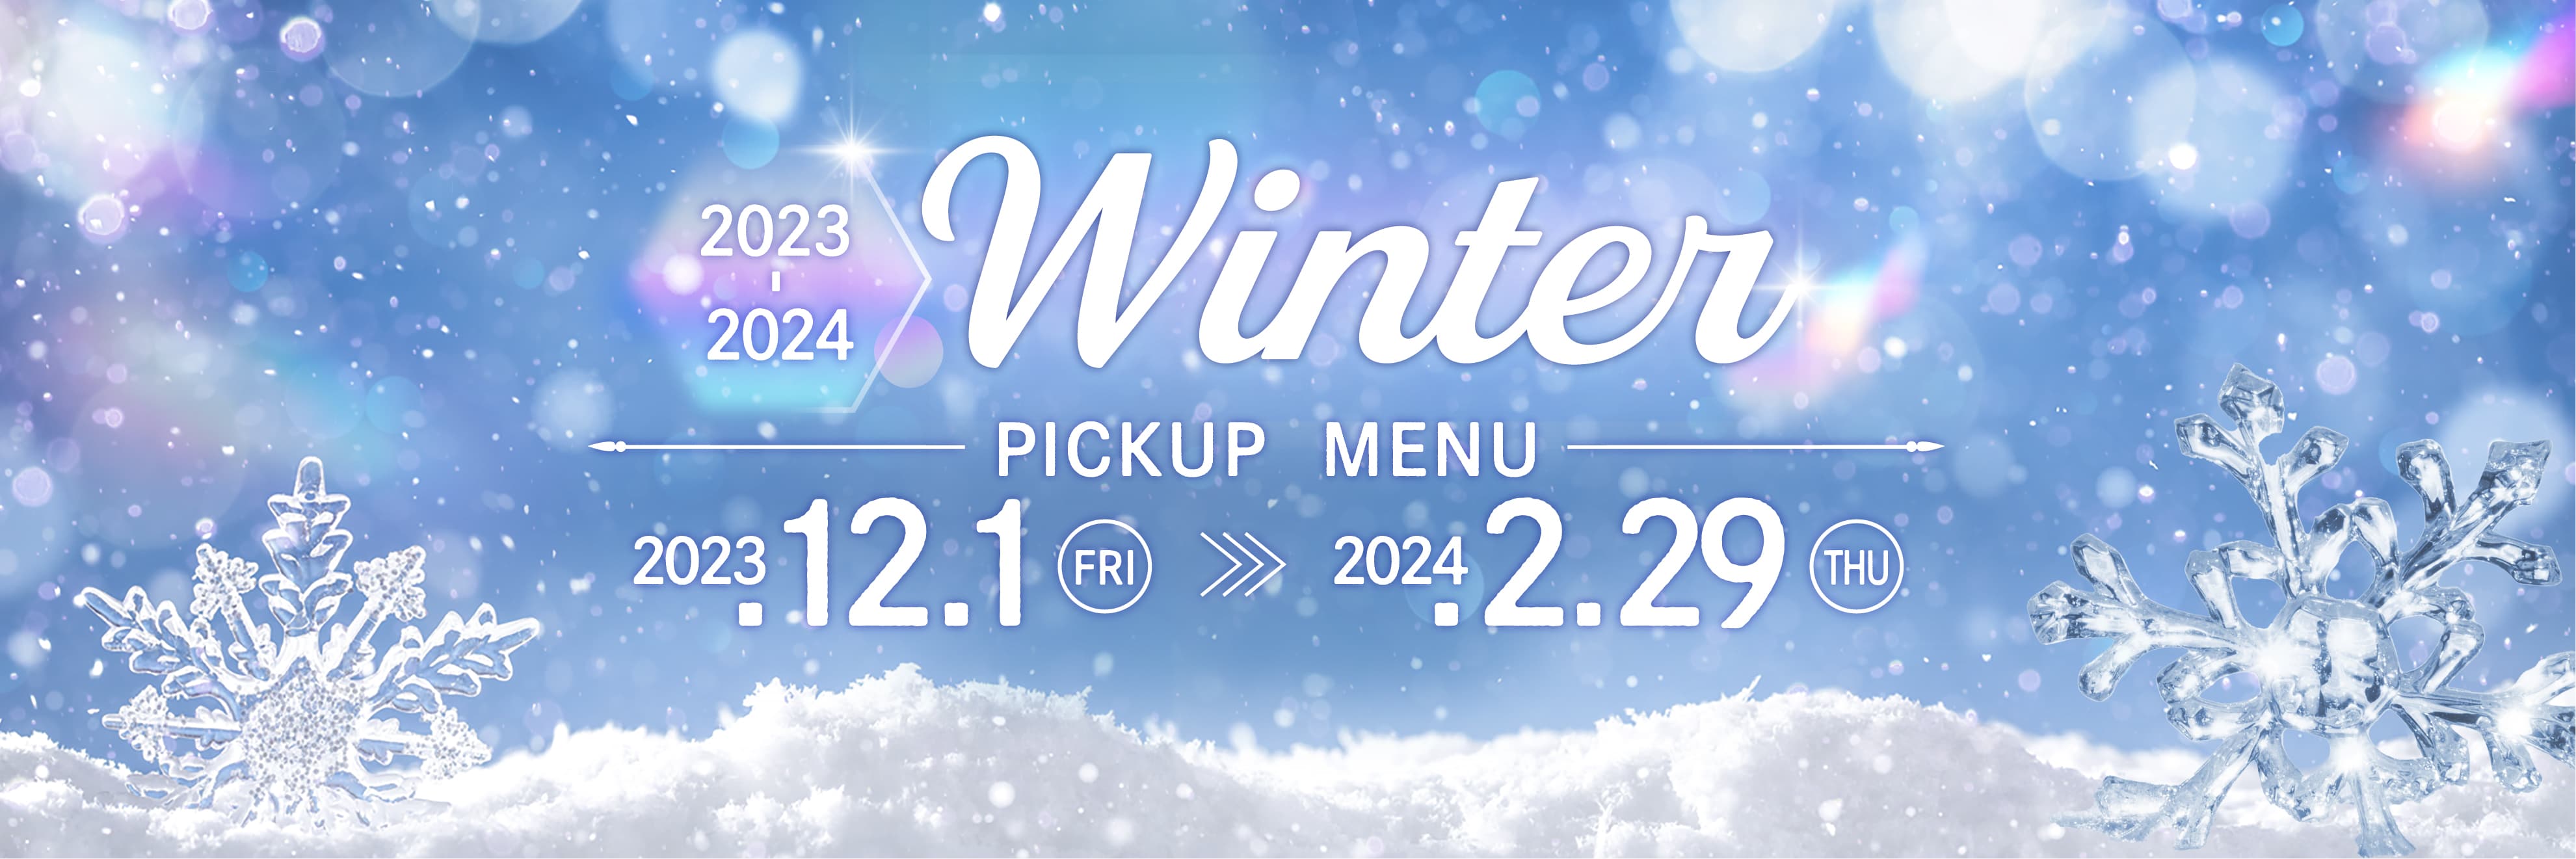 2023 Winter Pickup Menu